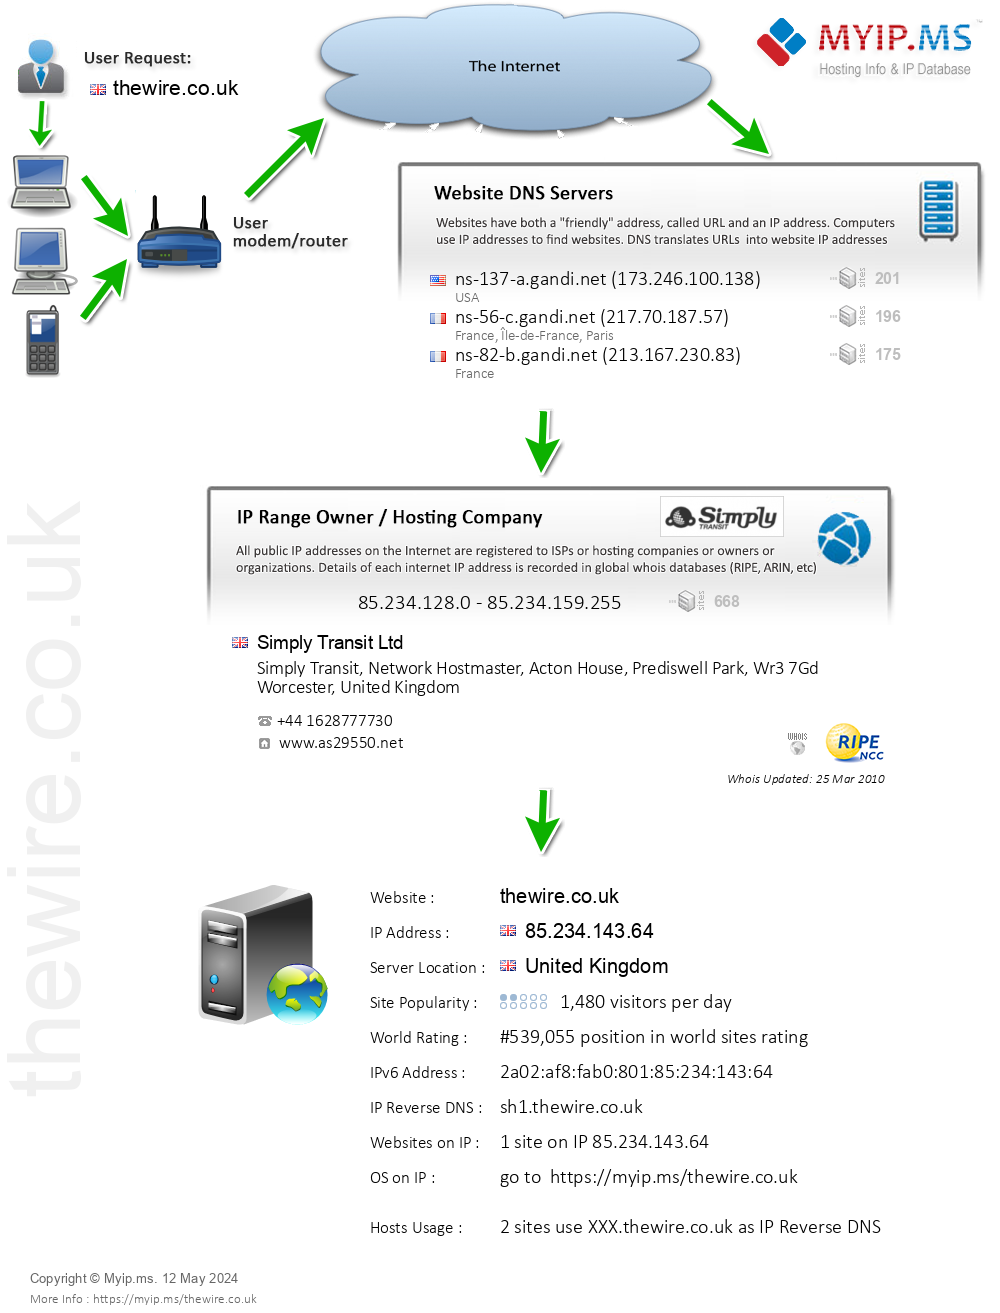 Thewire.co.uk - Website Hosting Visual IP Diagram